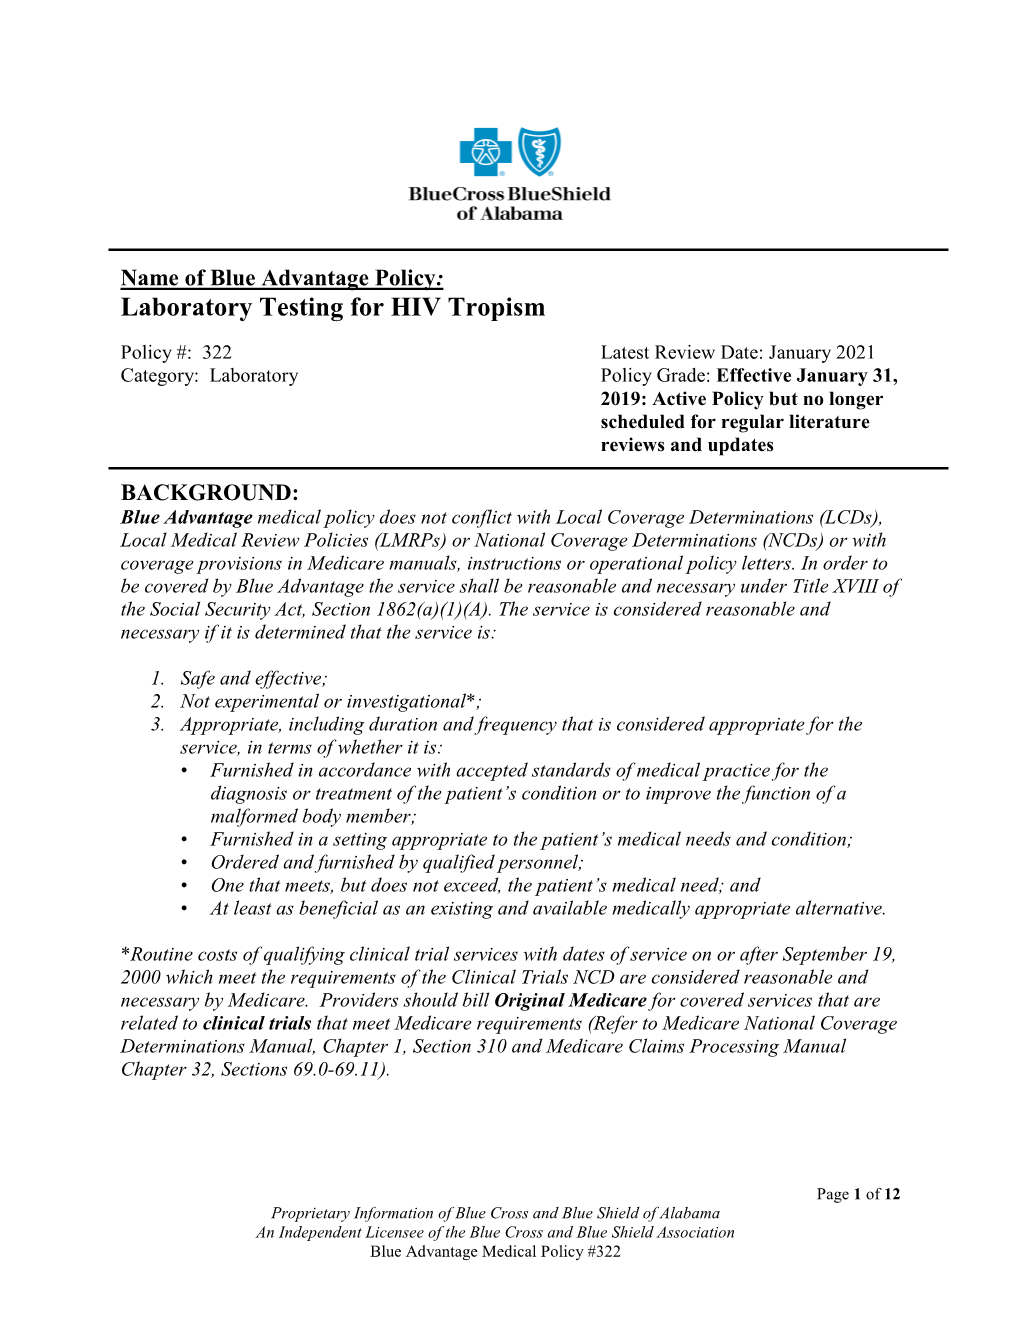 Laboratory Testing for HIV Tropism